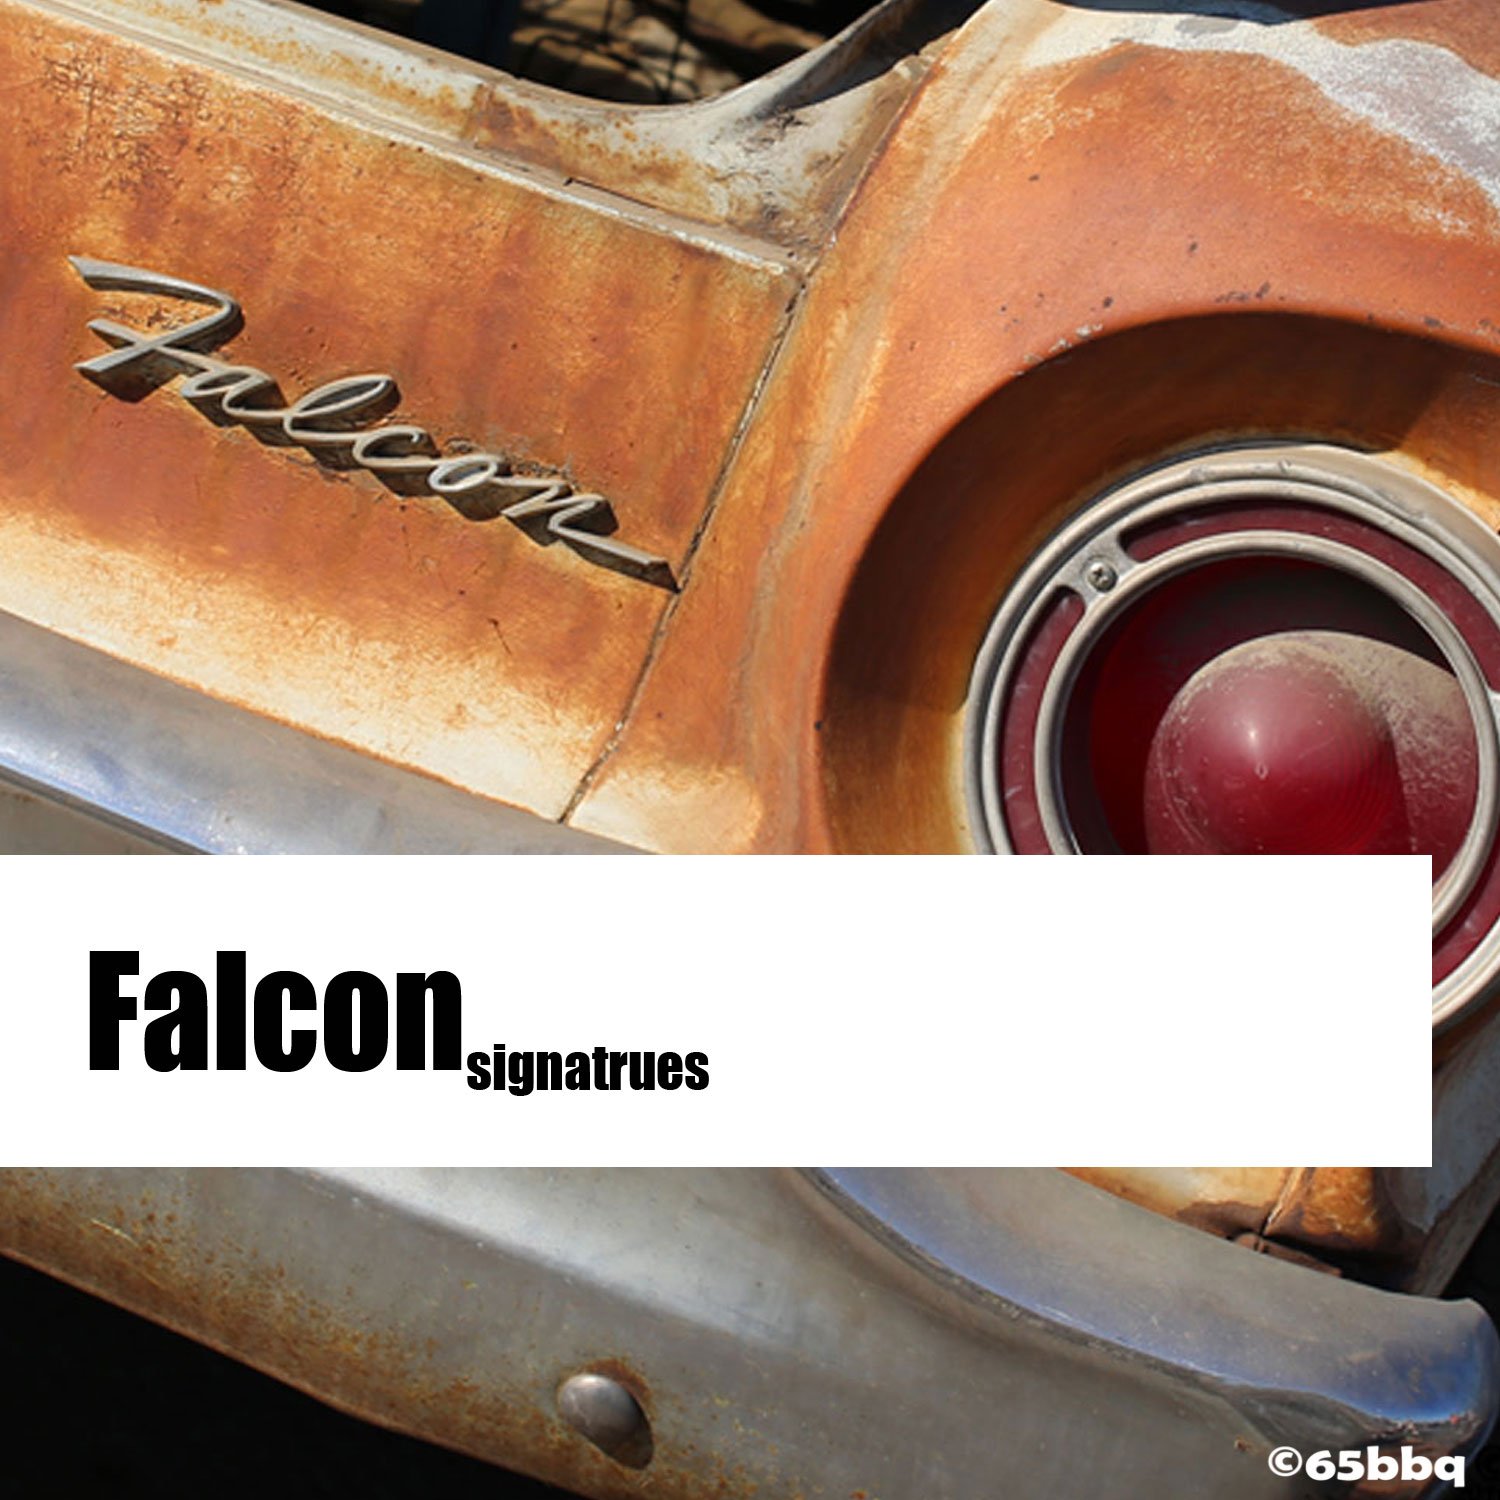 Ford Falcon Signatures